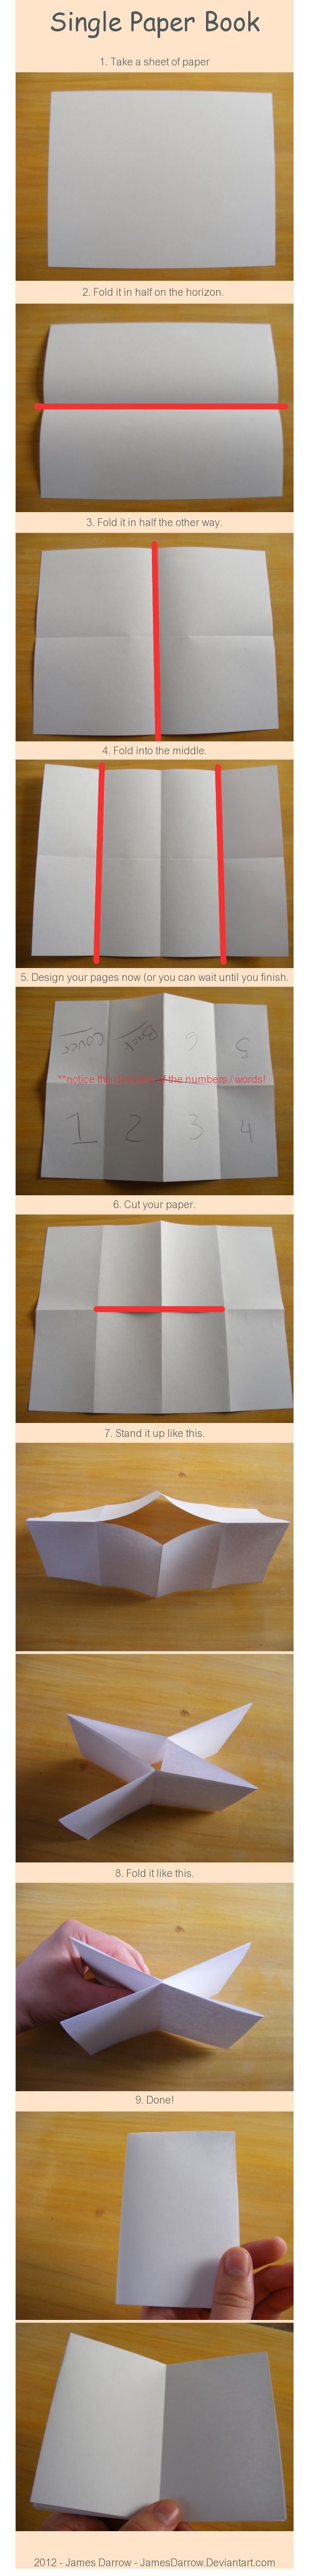 Single sheet of paper = mini book